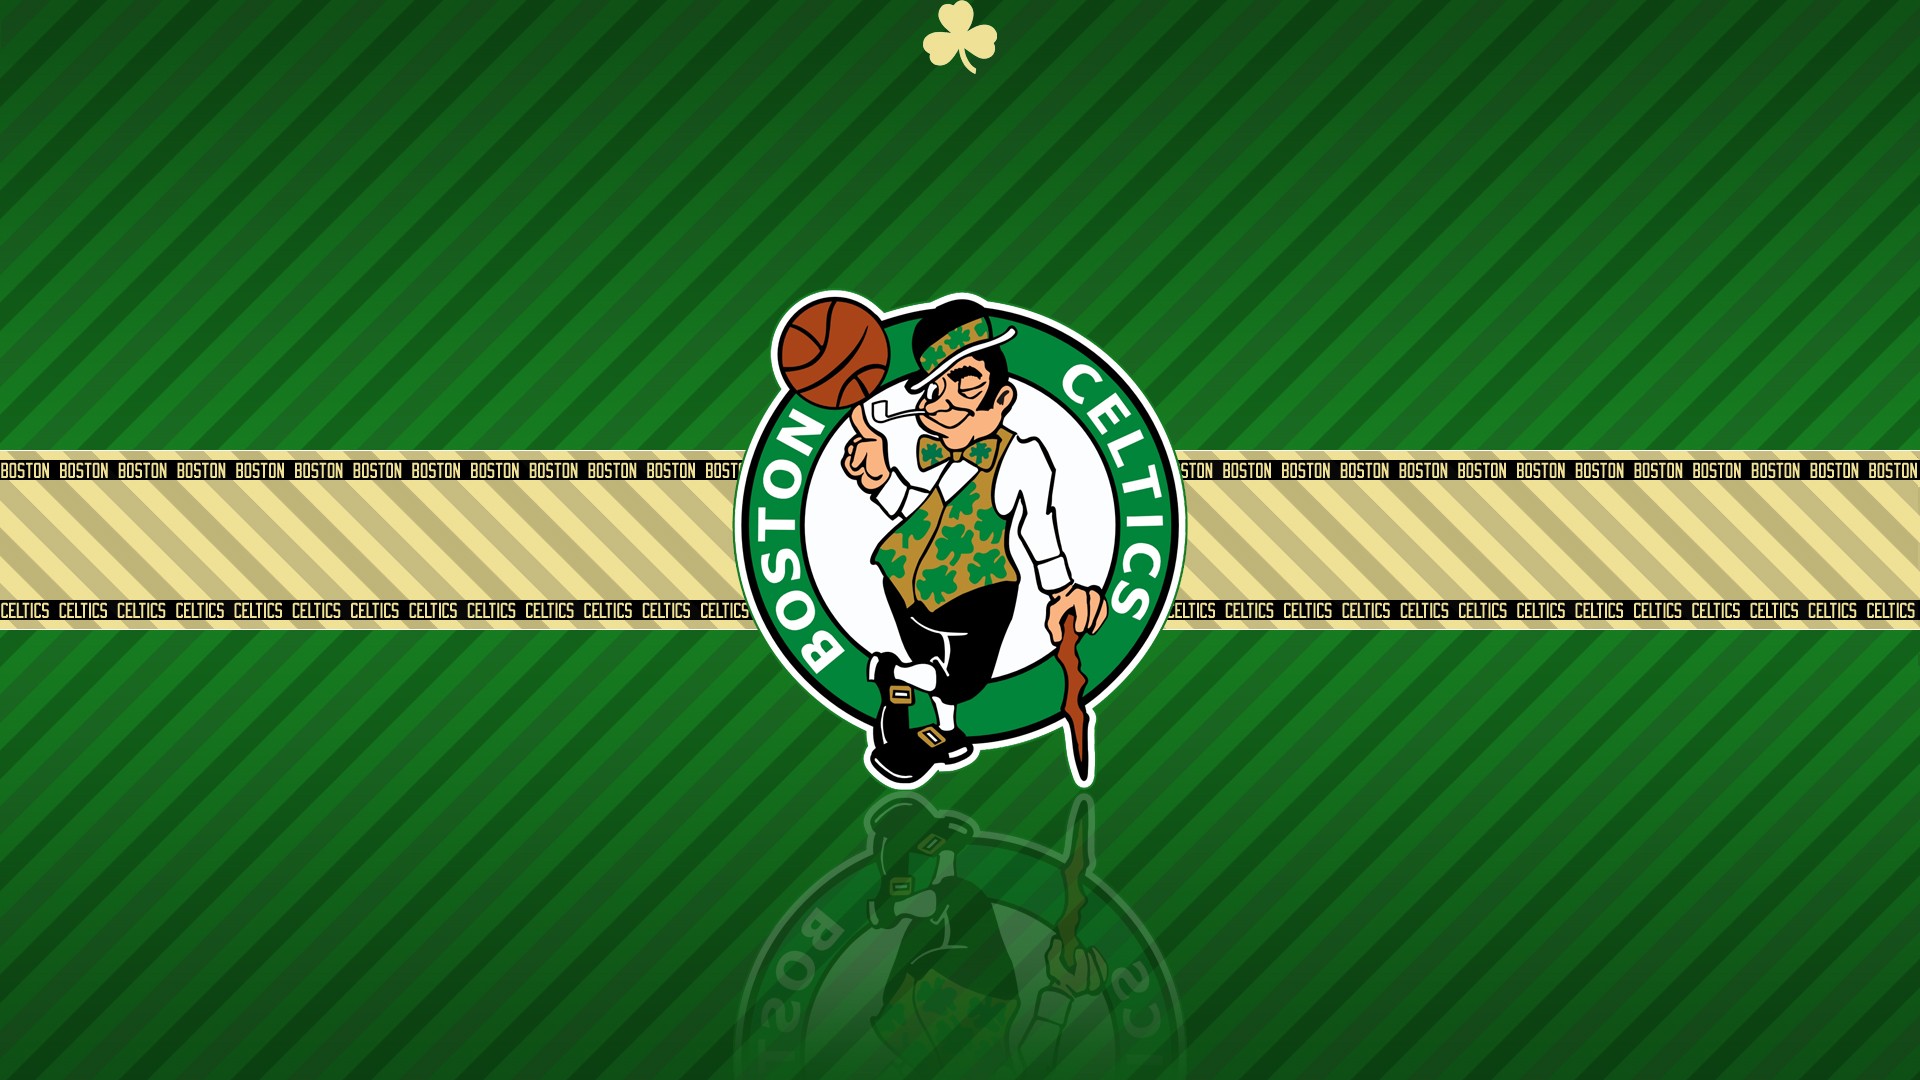  44 Boston Celtics HD Wallpapers WallpaperSafari